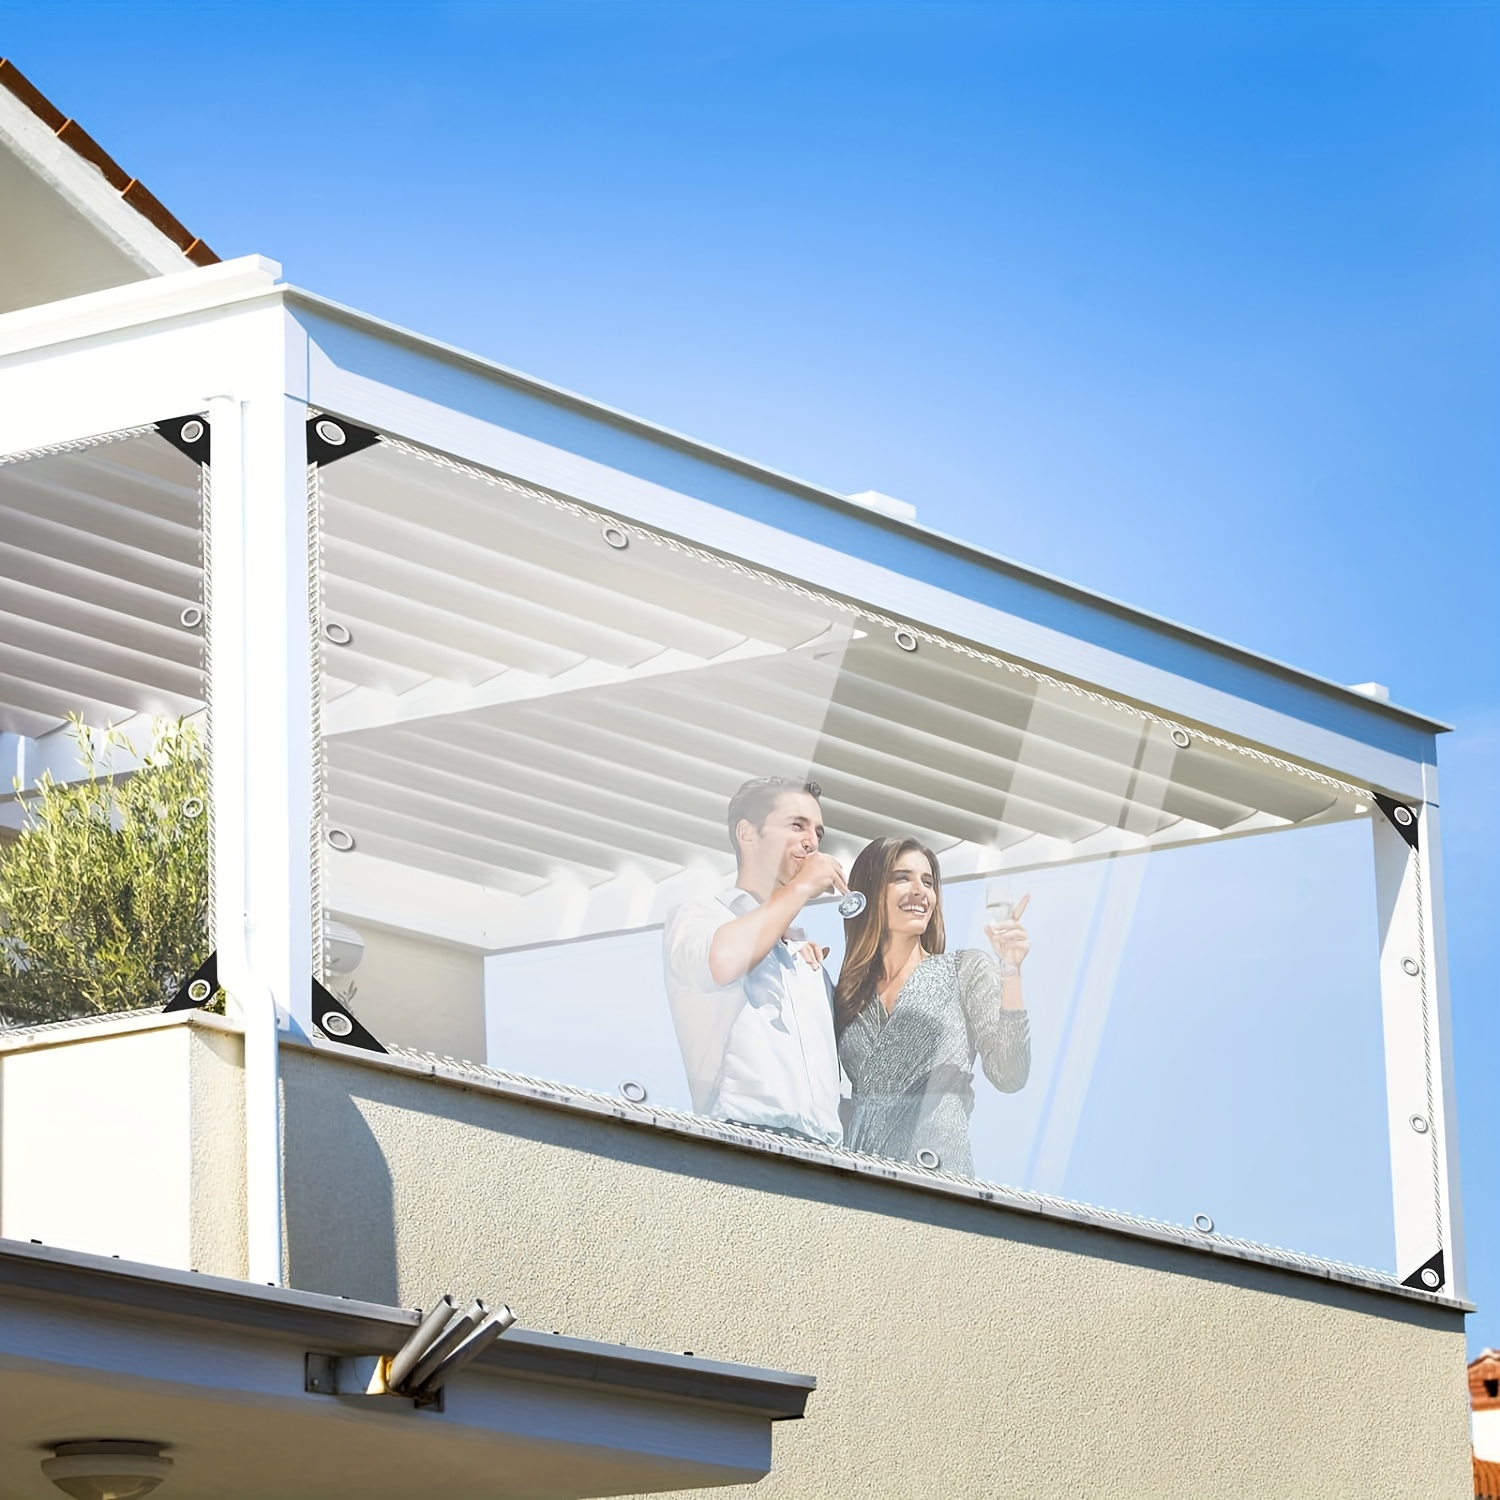  ZXCVASDF Lona impermeable transparente de 0.012 in de grosor,  cubierta de lona transparente con ojales, lona multiusos, impermeable,  antidesgarros, para invernadero, balcón, exterior, personalizable, 4.9 x  14.8 ft/4.9 x 14.7 pies 